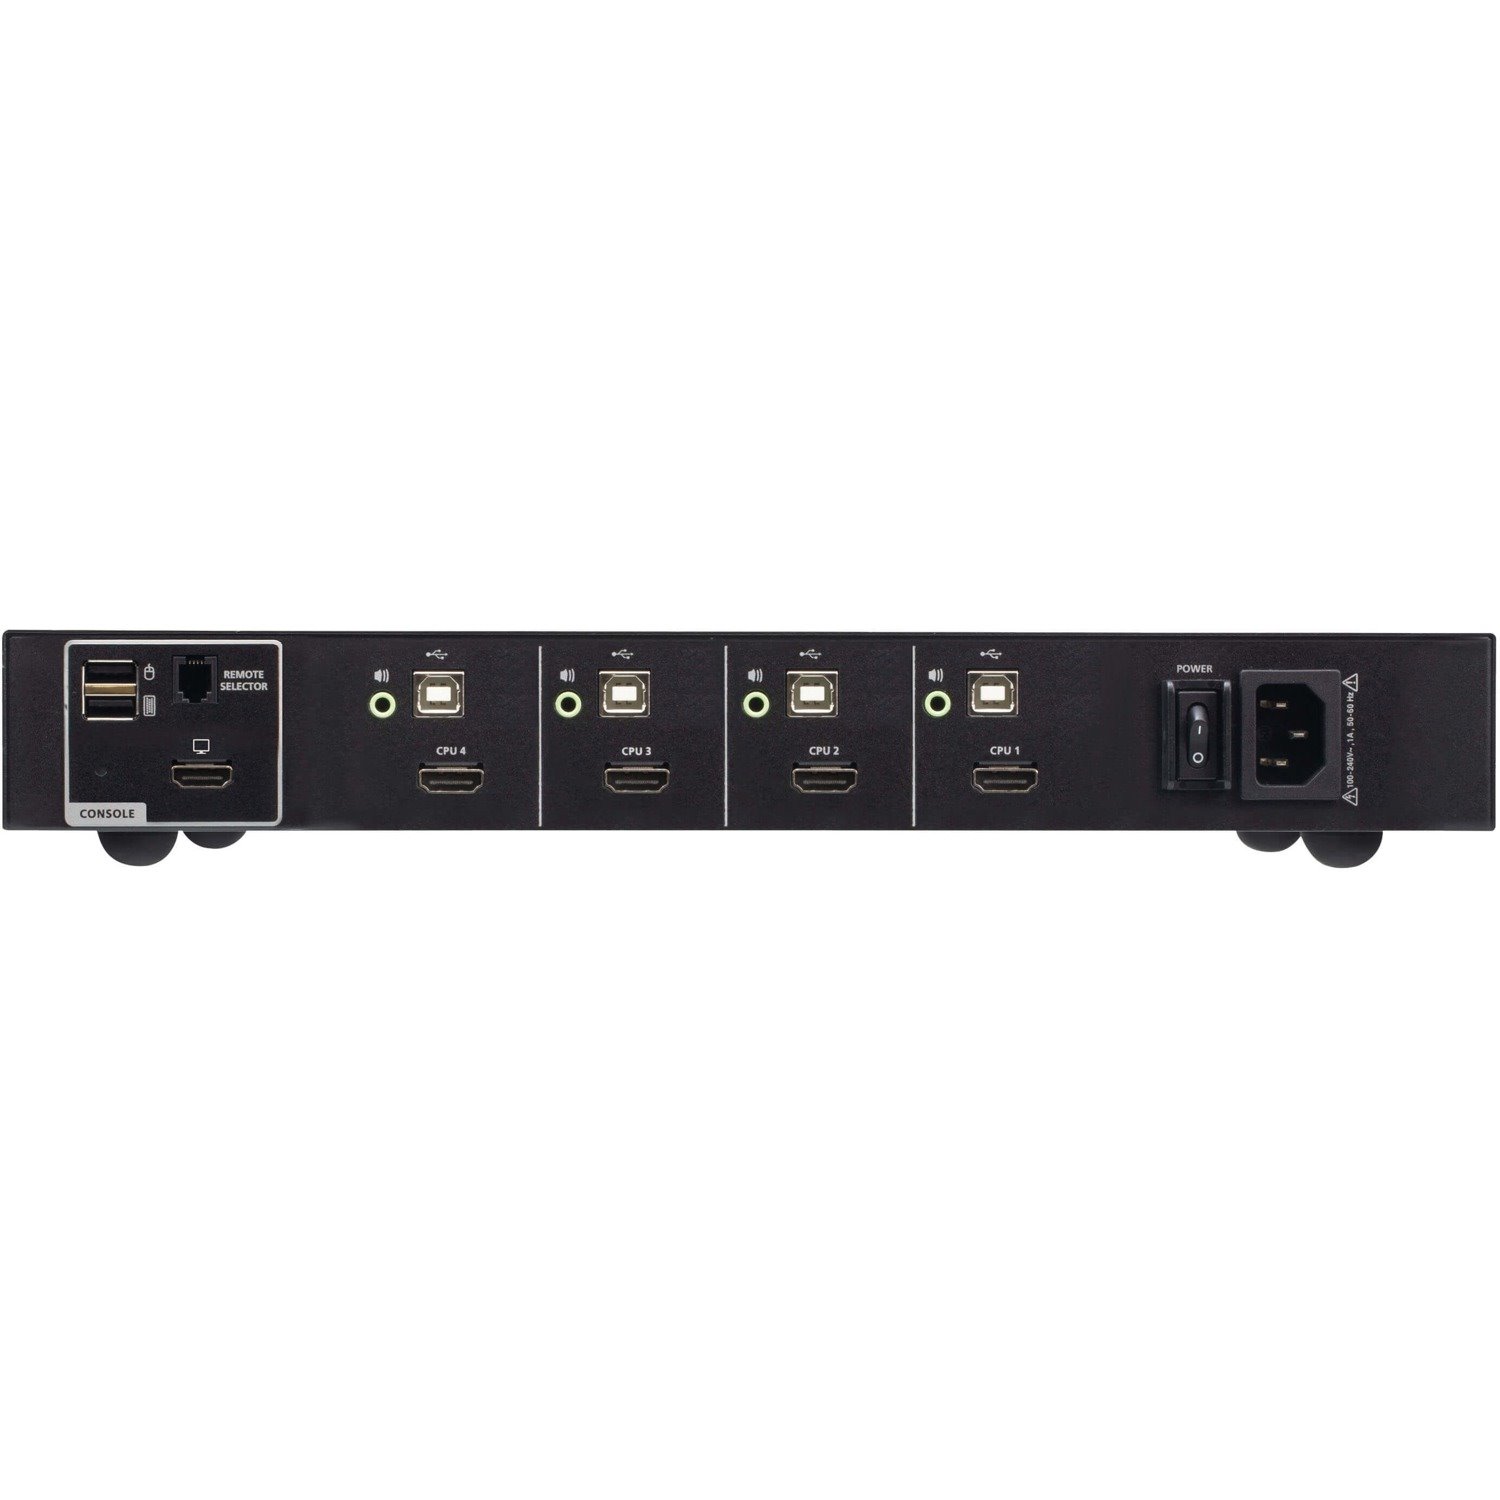 ATEN 4-Port USB HDMI Secure KVM Switch (PSD PP v4.0 Compliant)